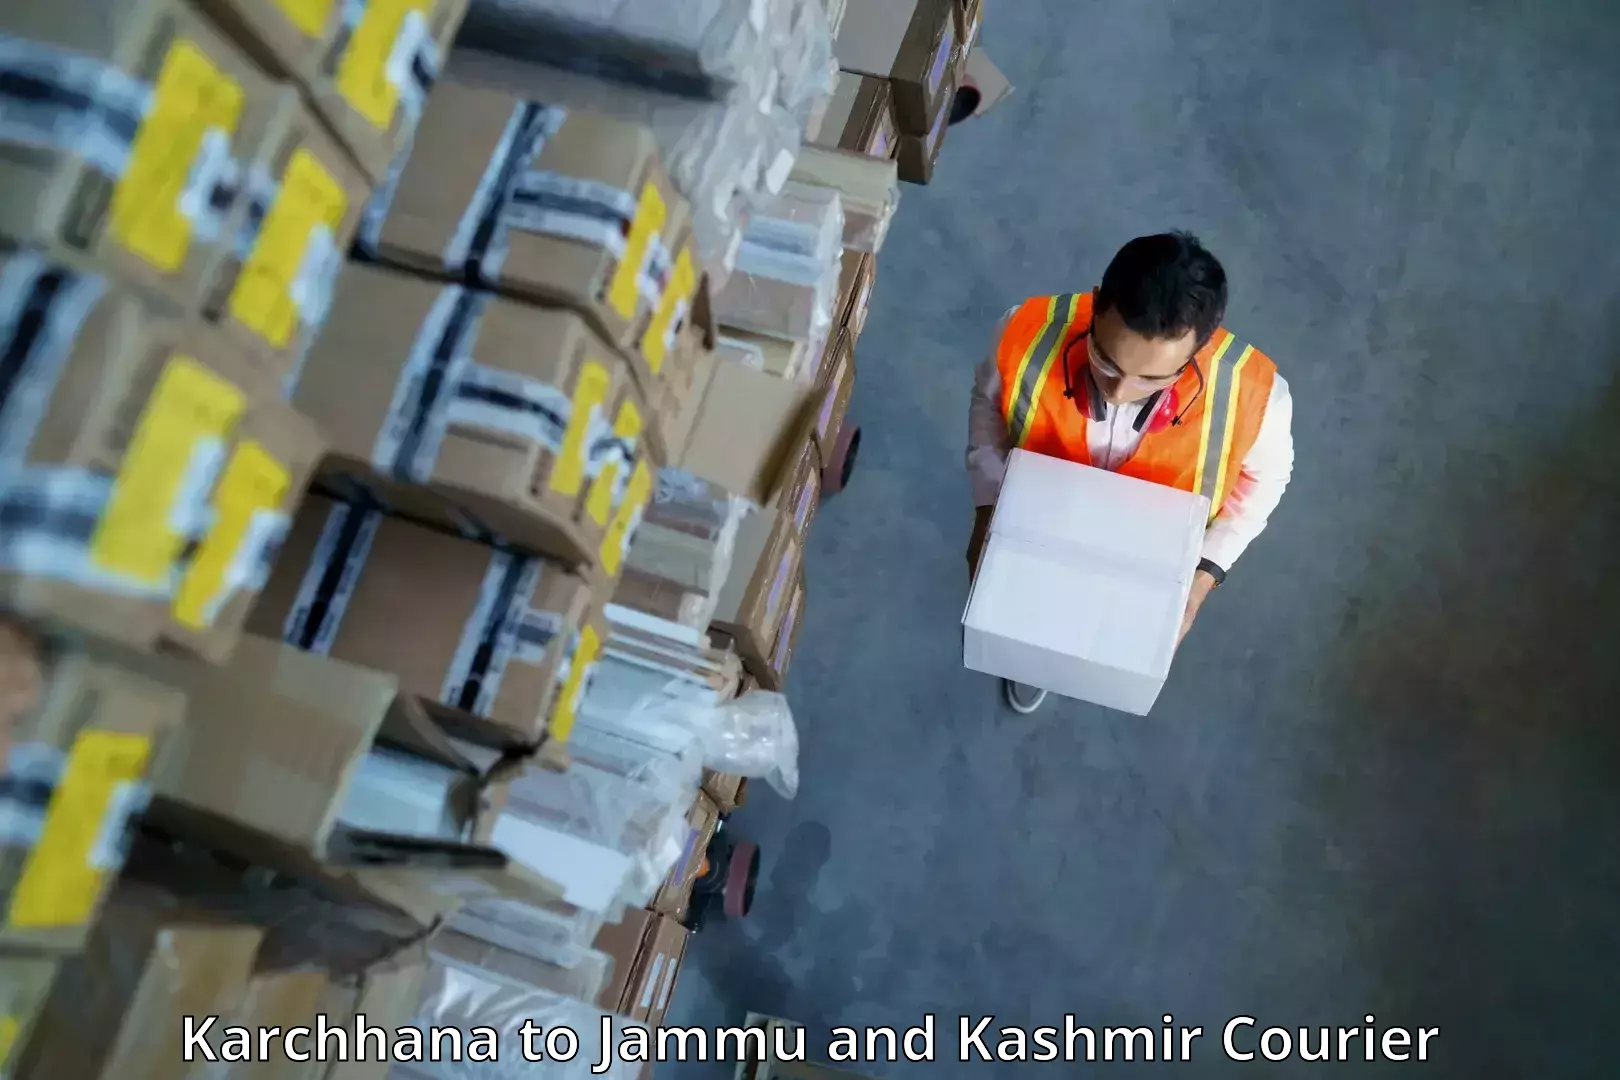 Global courier networks Karchhana to Jammu and Kashmir